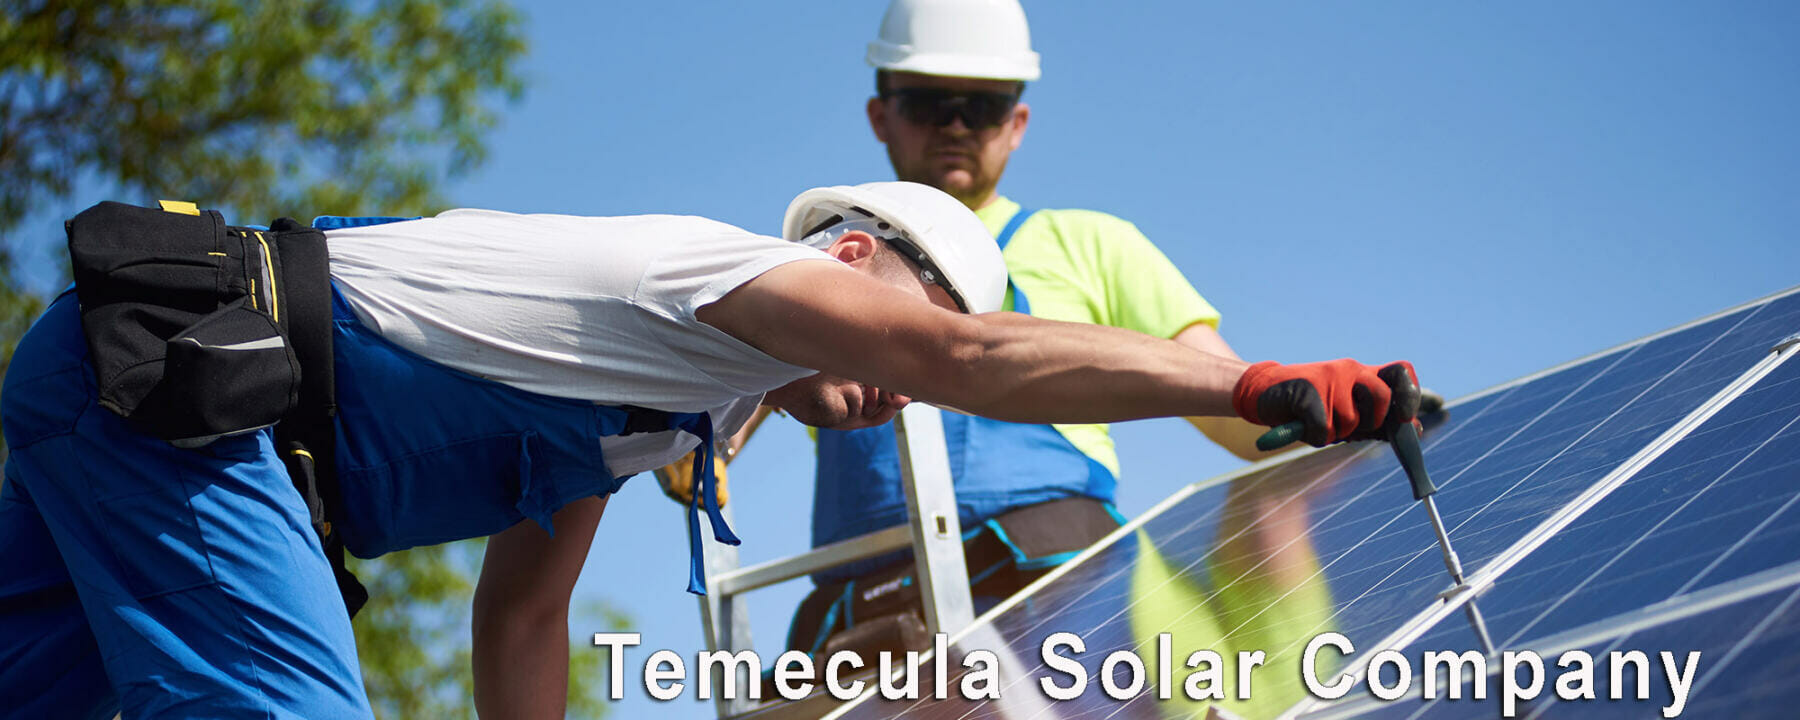 Temecula Solar Company